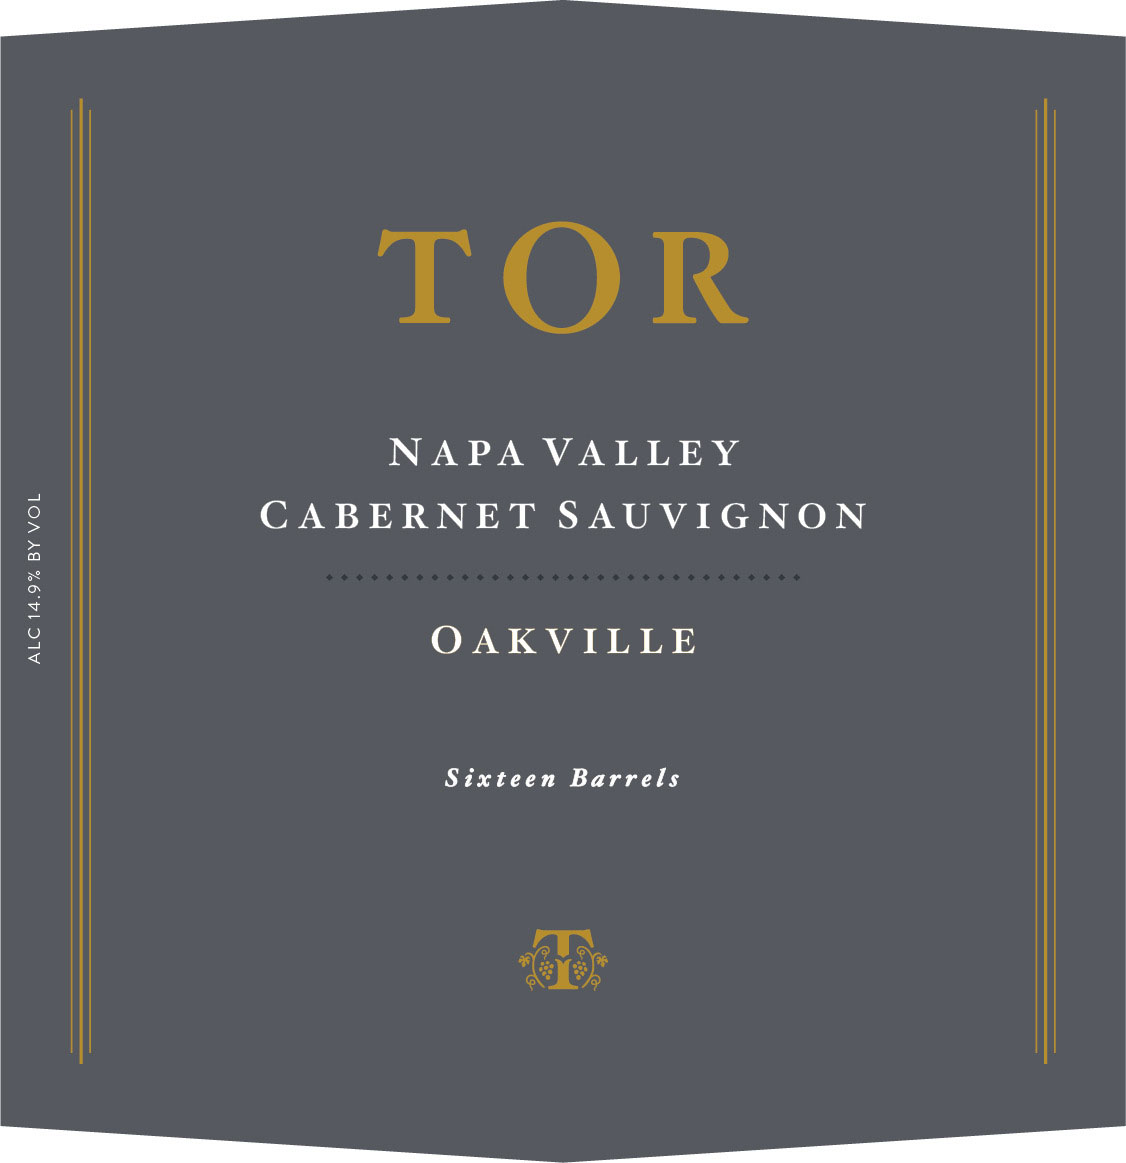 TOR - Cabernet Sauvignon - Oakville label